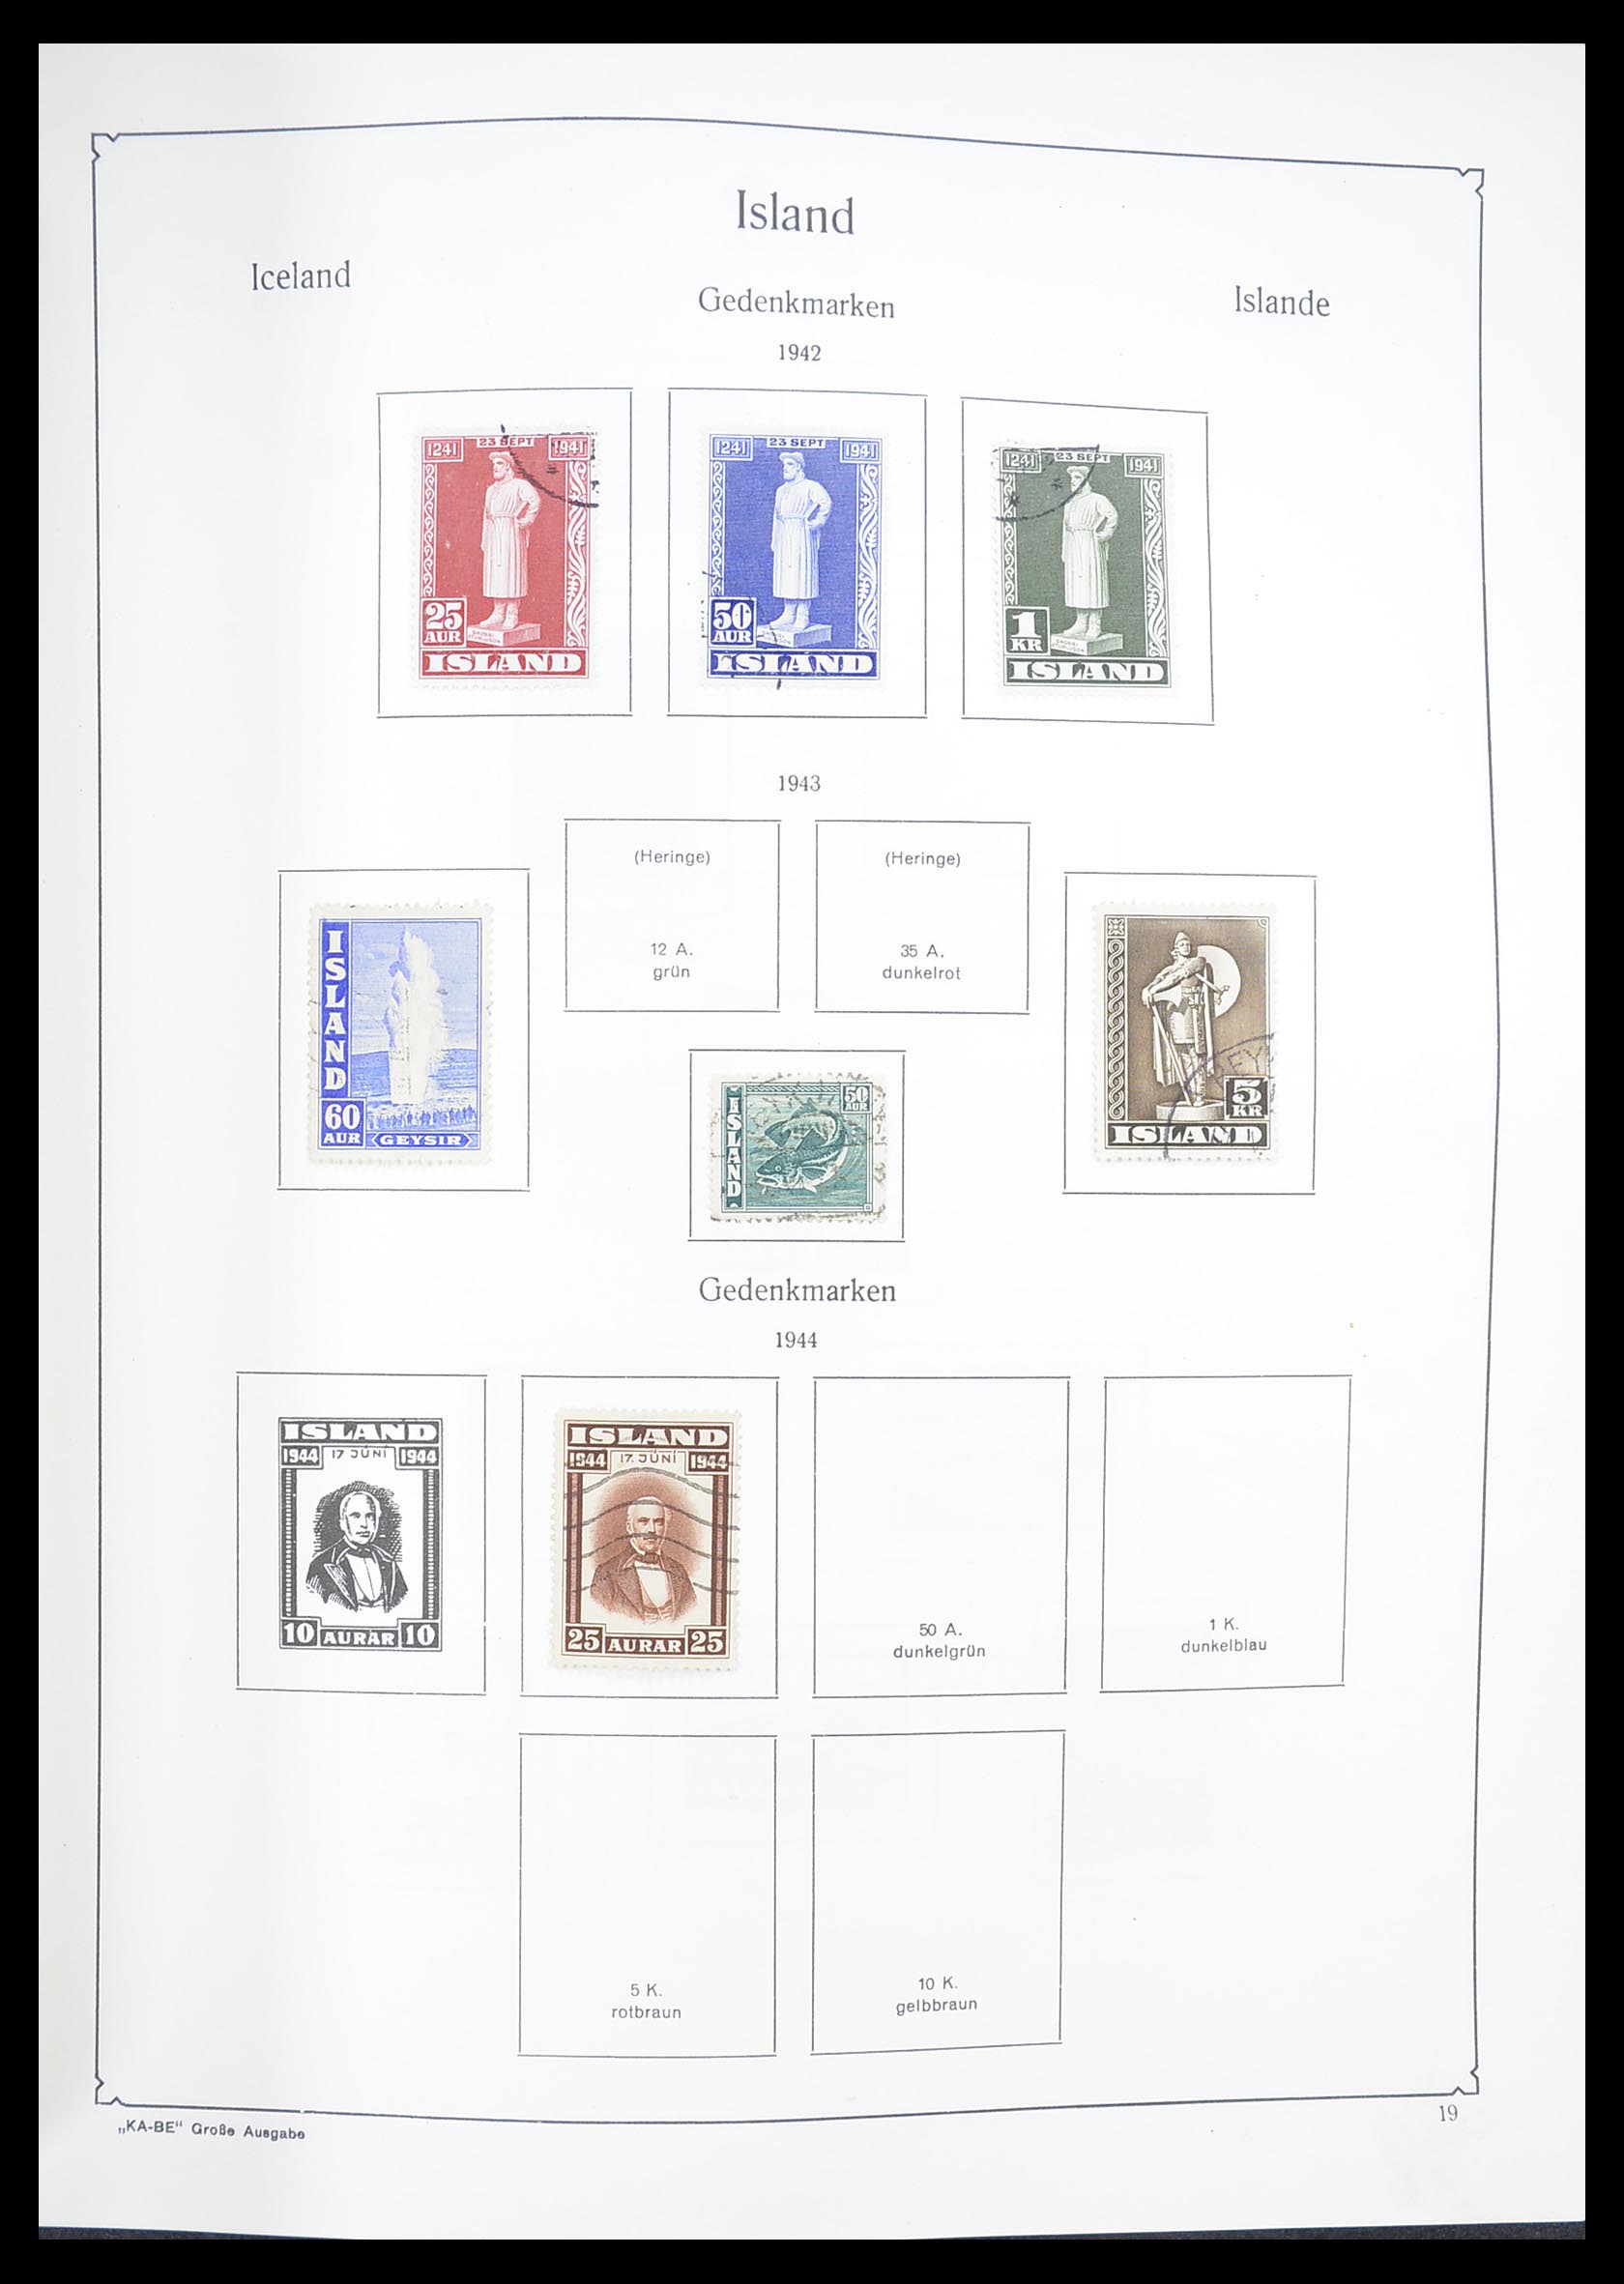 33379 075 - Stamp collection 33379 Scandinavia 1856-1972.